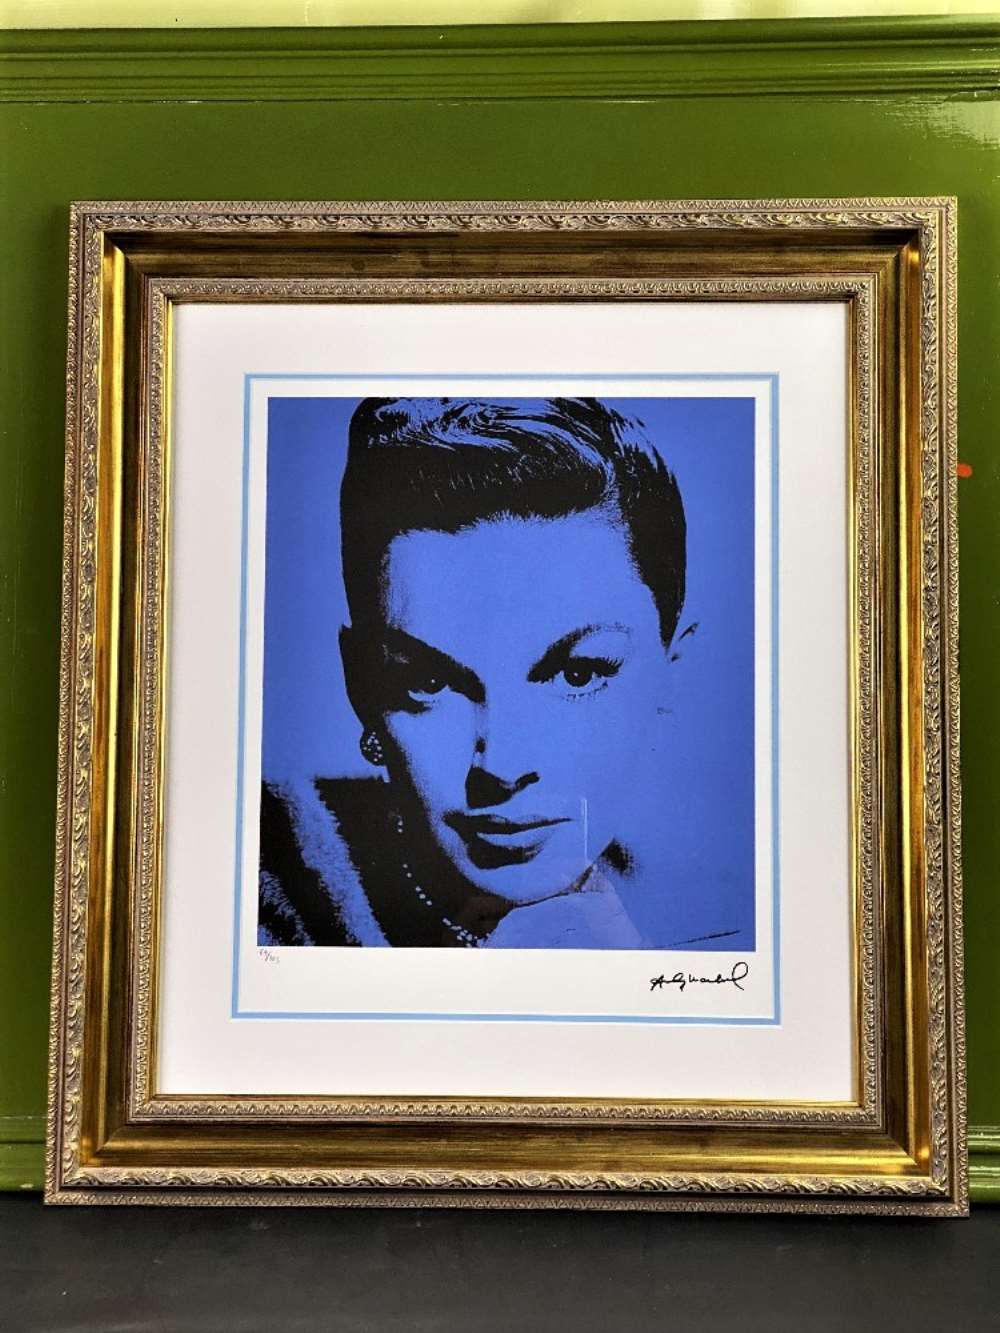 Andy Warhol (1928-1987) &#8220;Judy Garland&#8221; Ltd Edition Lithograph